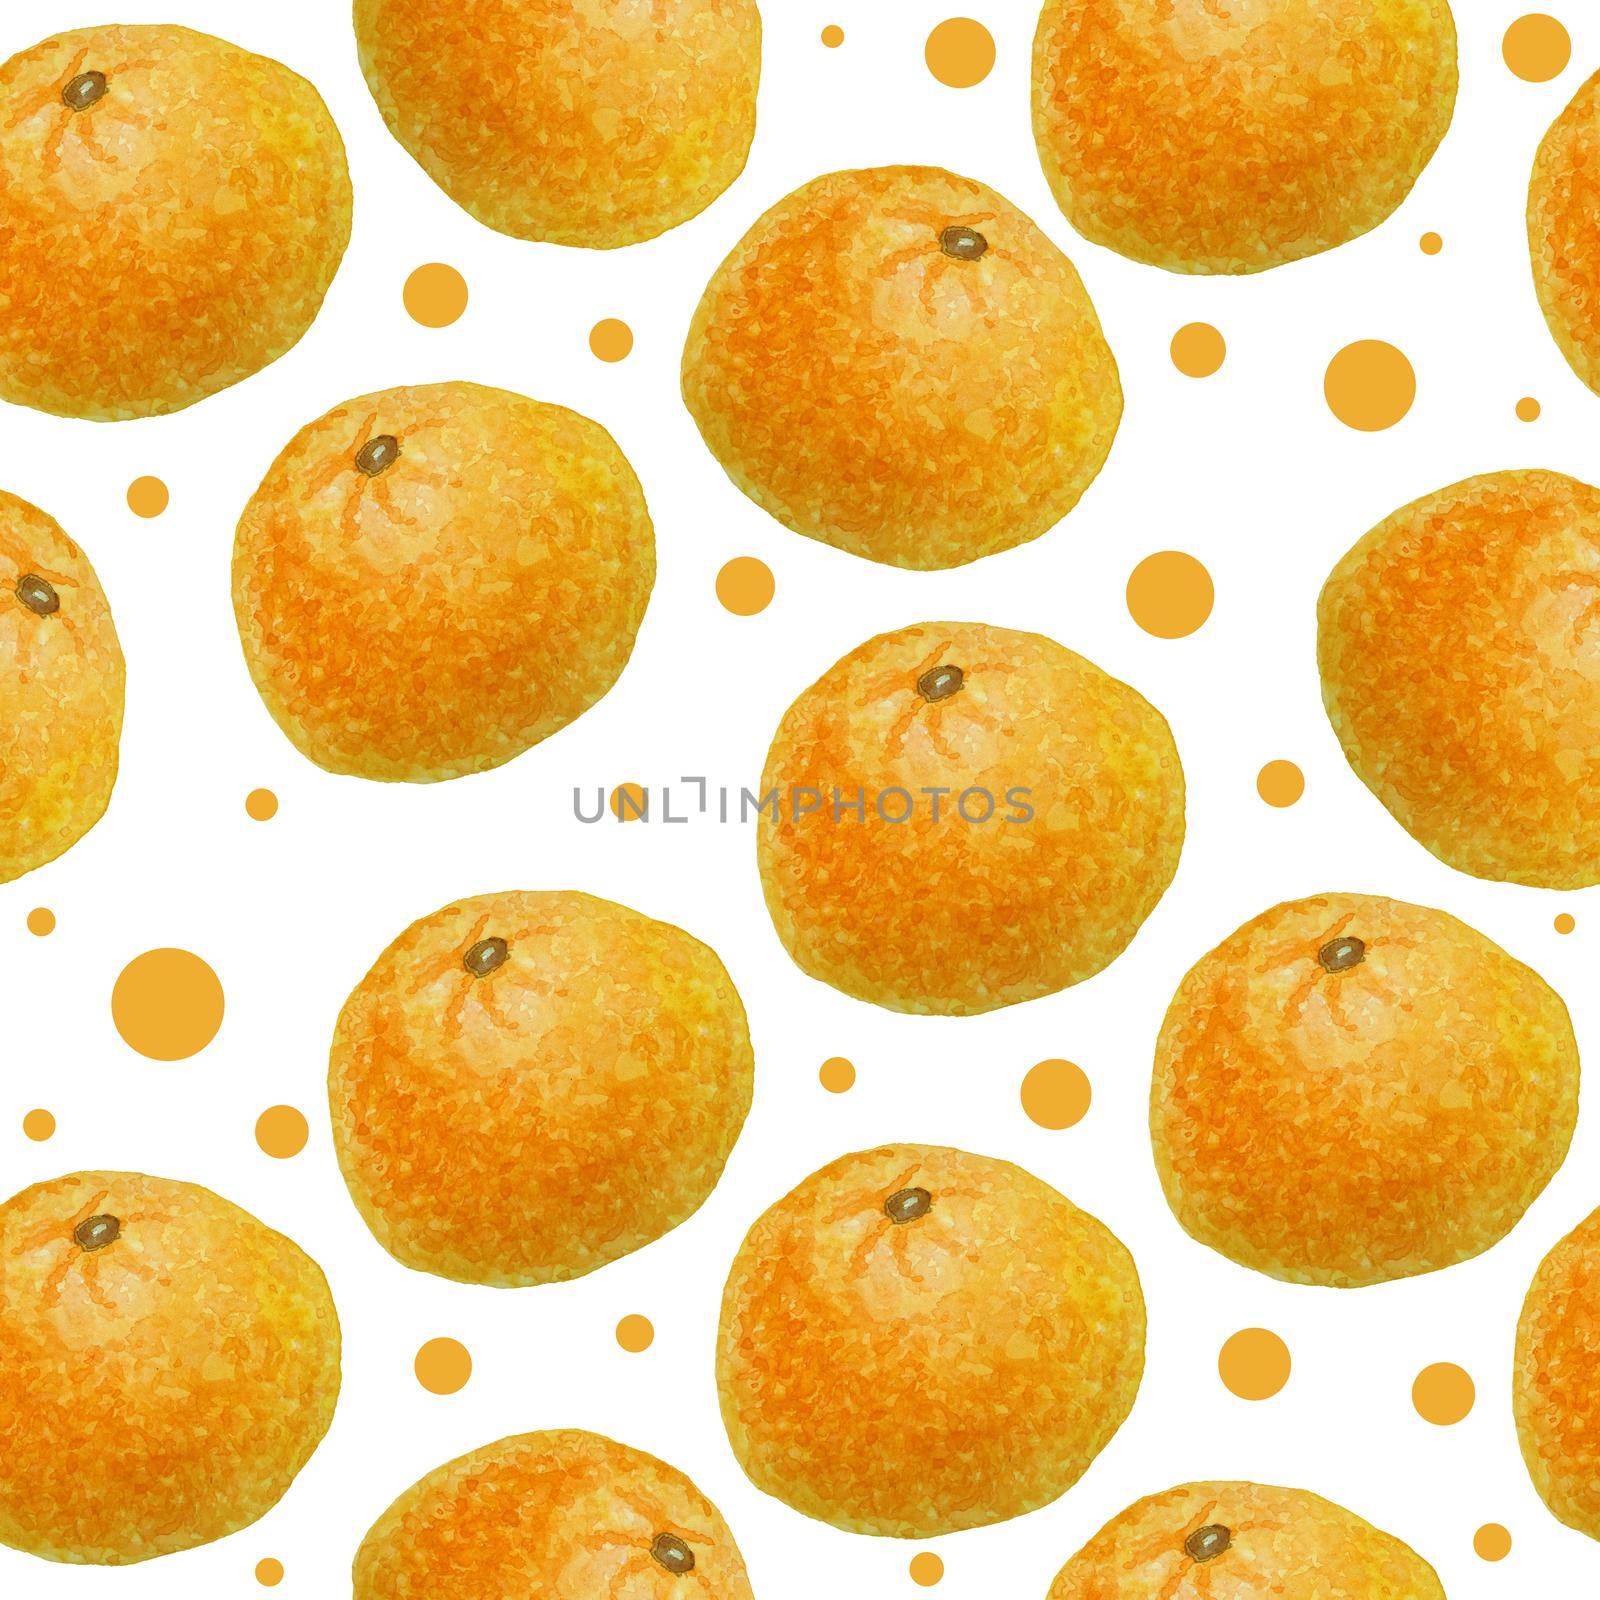 Watercolor hand drawn seamless pattern illustration of bright orange tangerine mandarine citrus fruits with polka dot circles background. For food organic vegetarian labels, packaging. Natural trendy design. by Lagmar